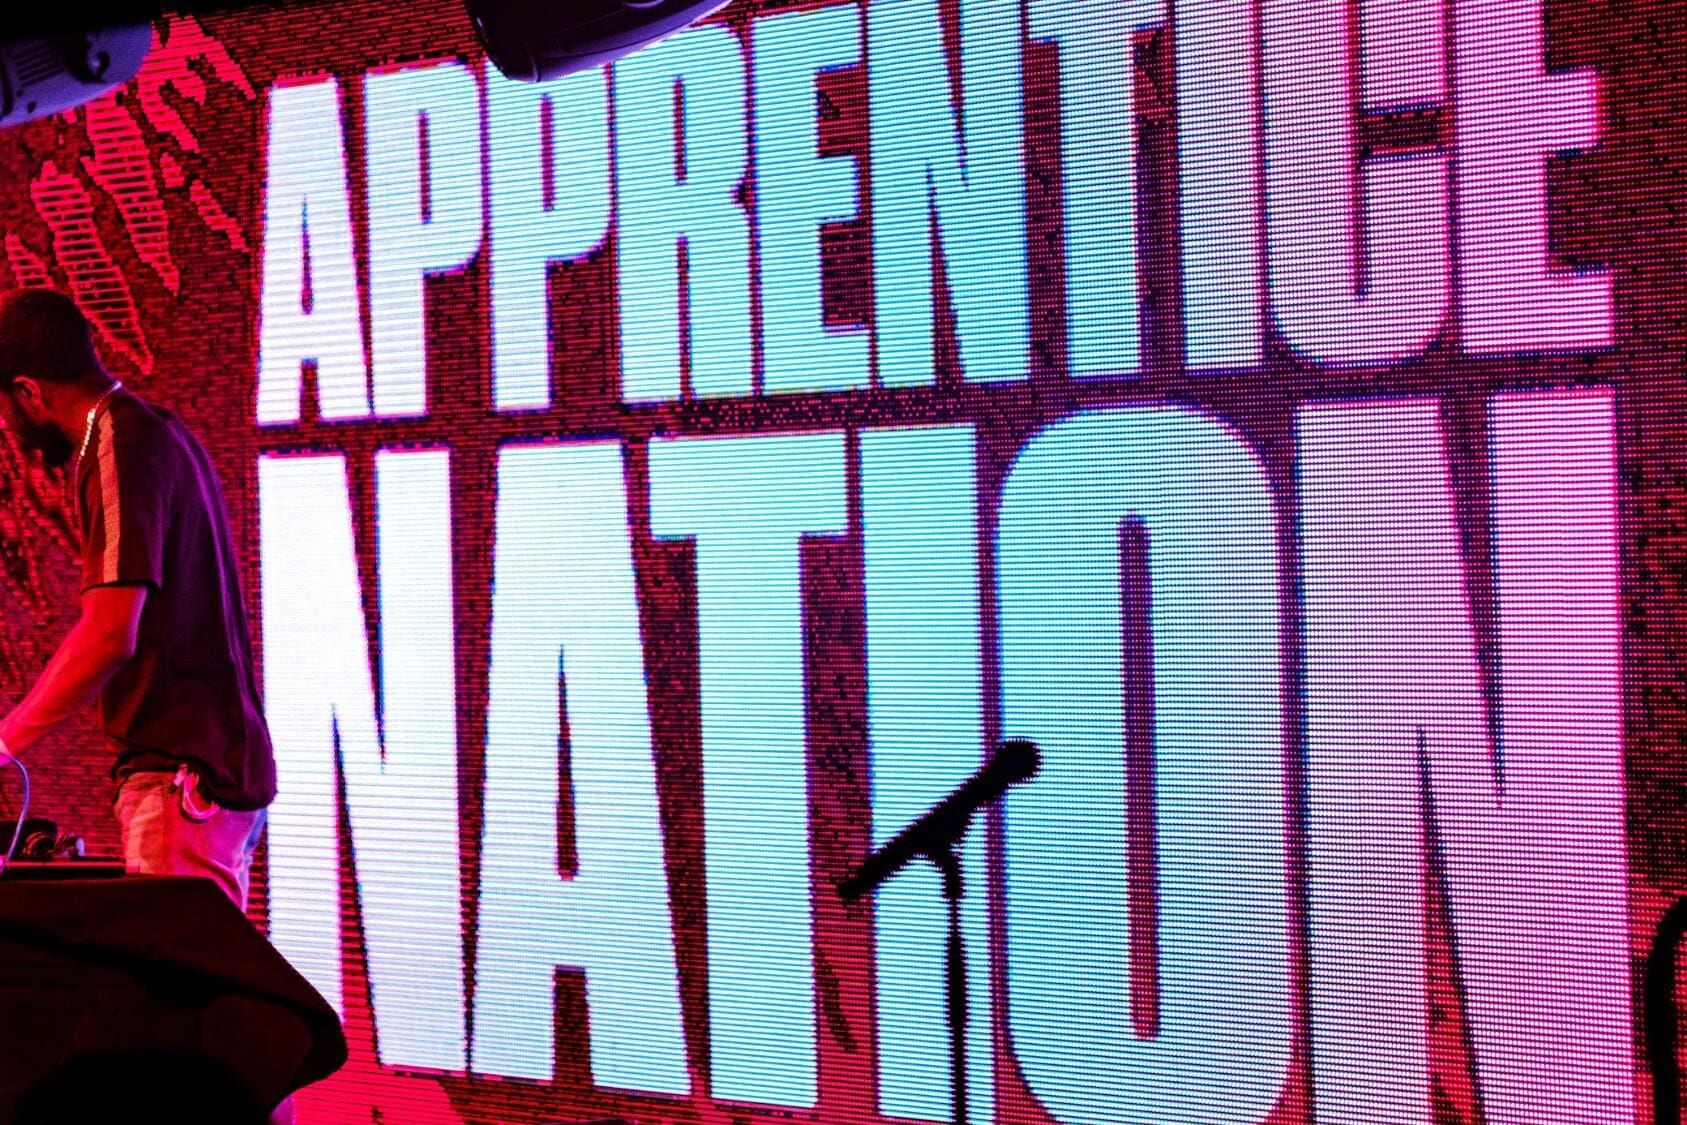 The Apprentice Nation logo lit up on stage